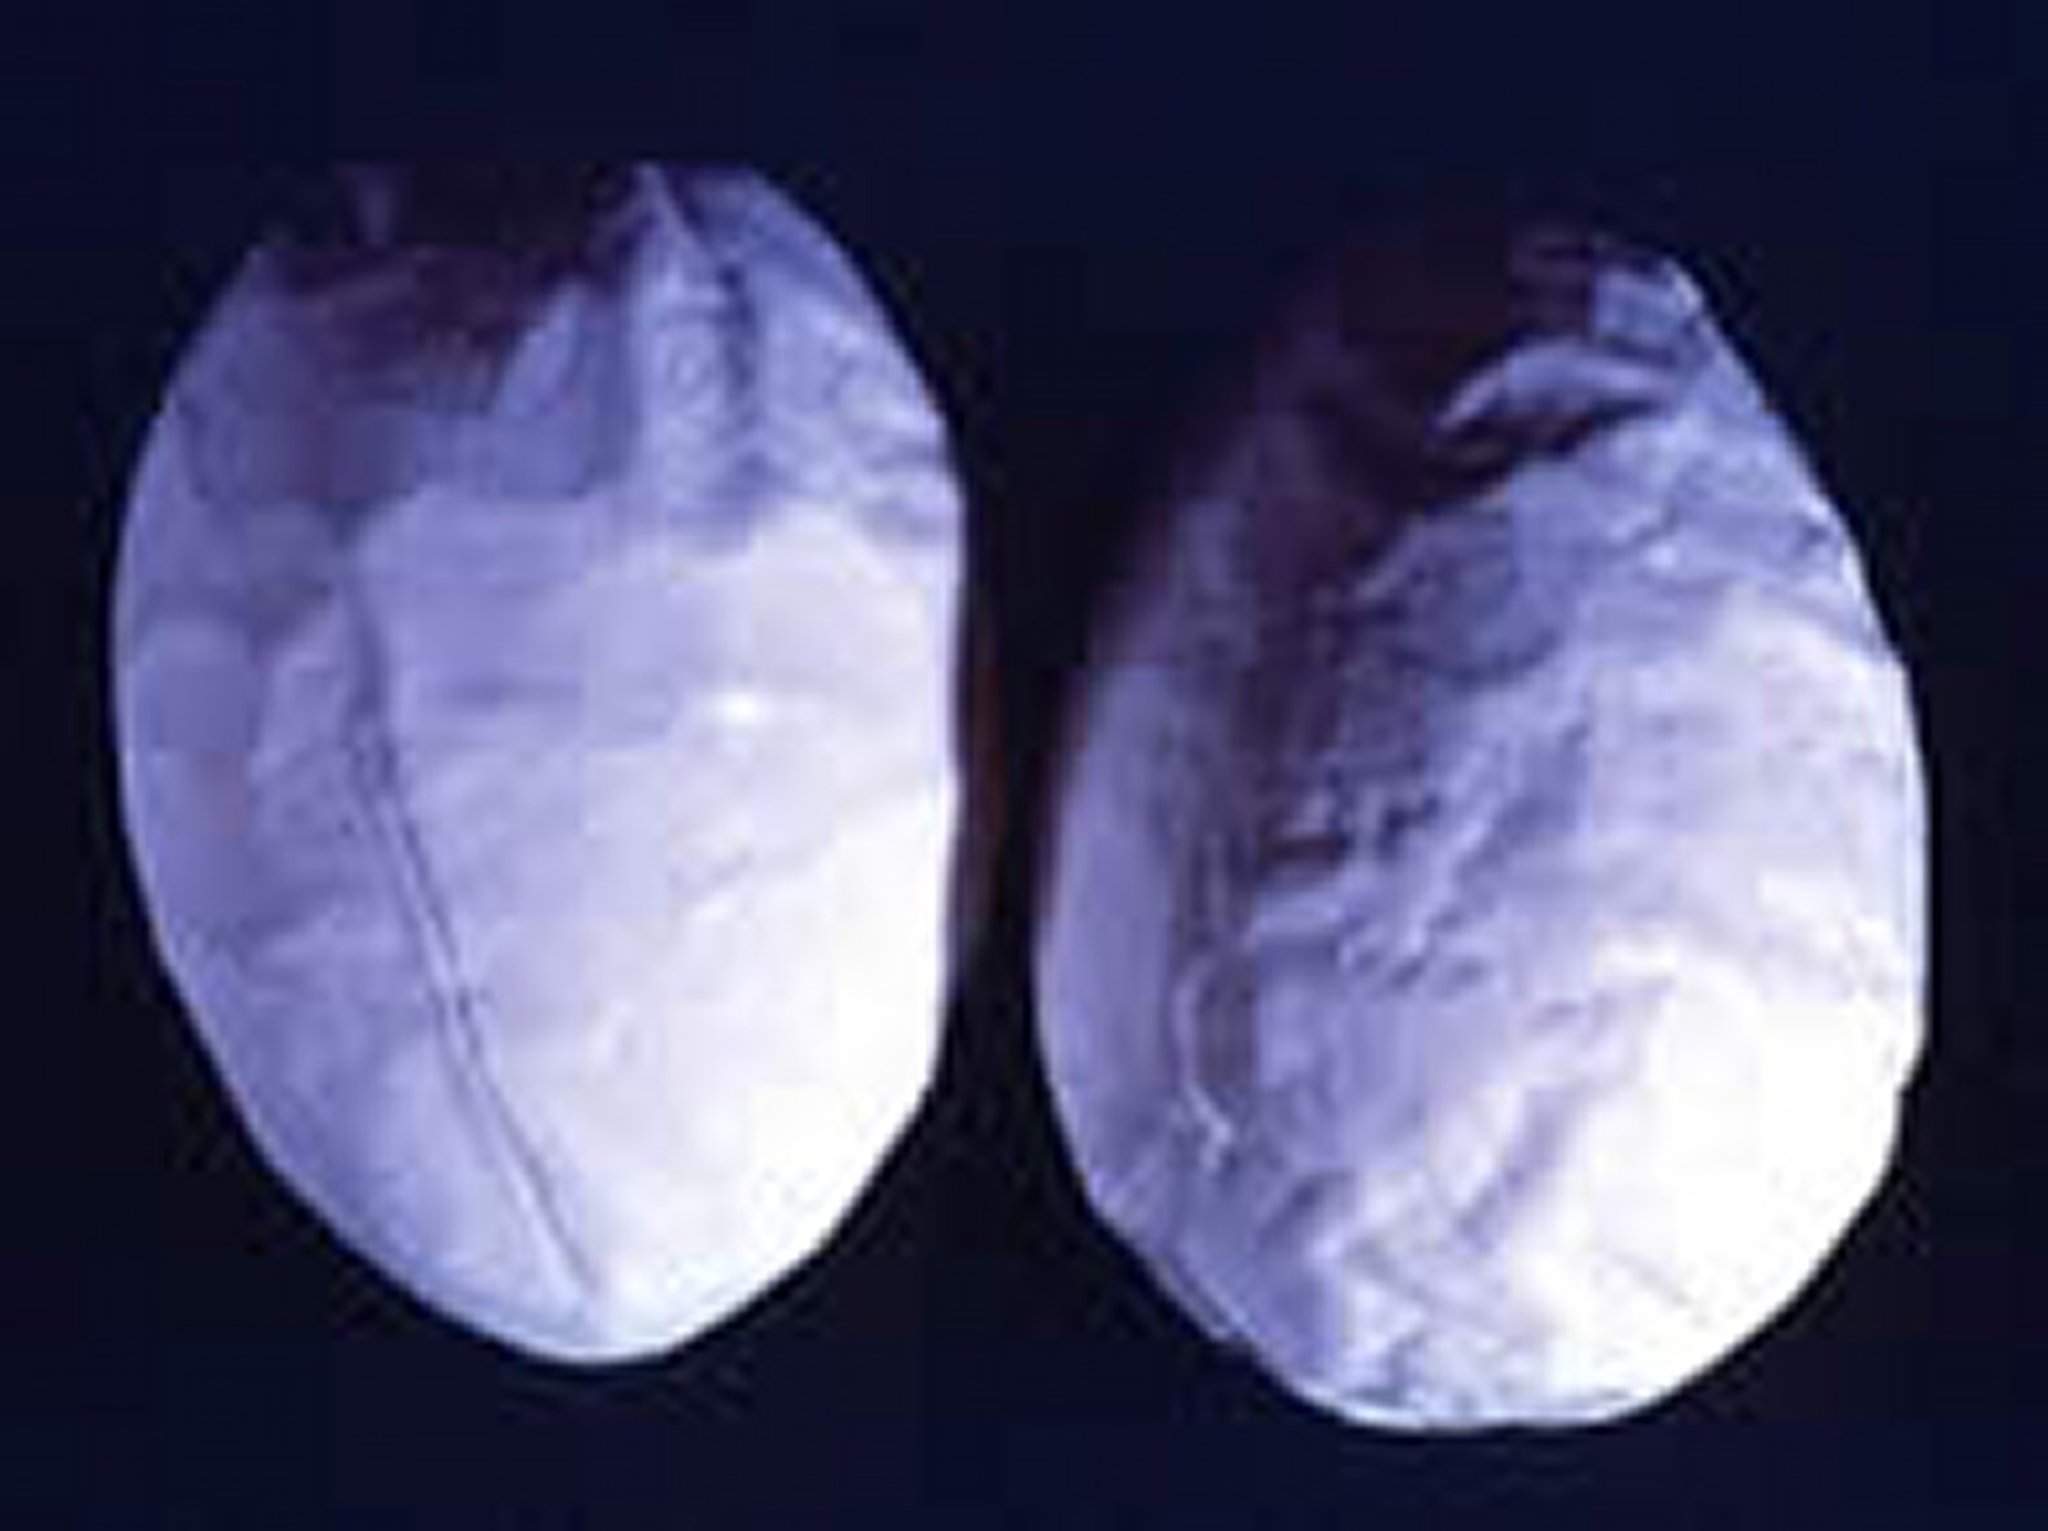 Infectious bronchitis, wrinkled egg shells